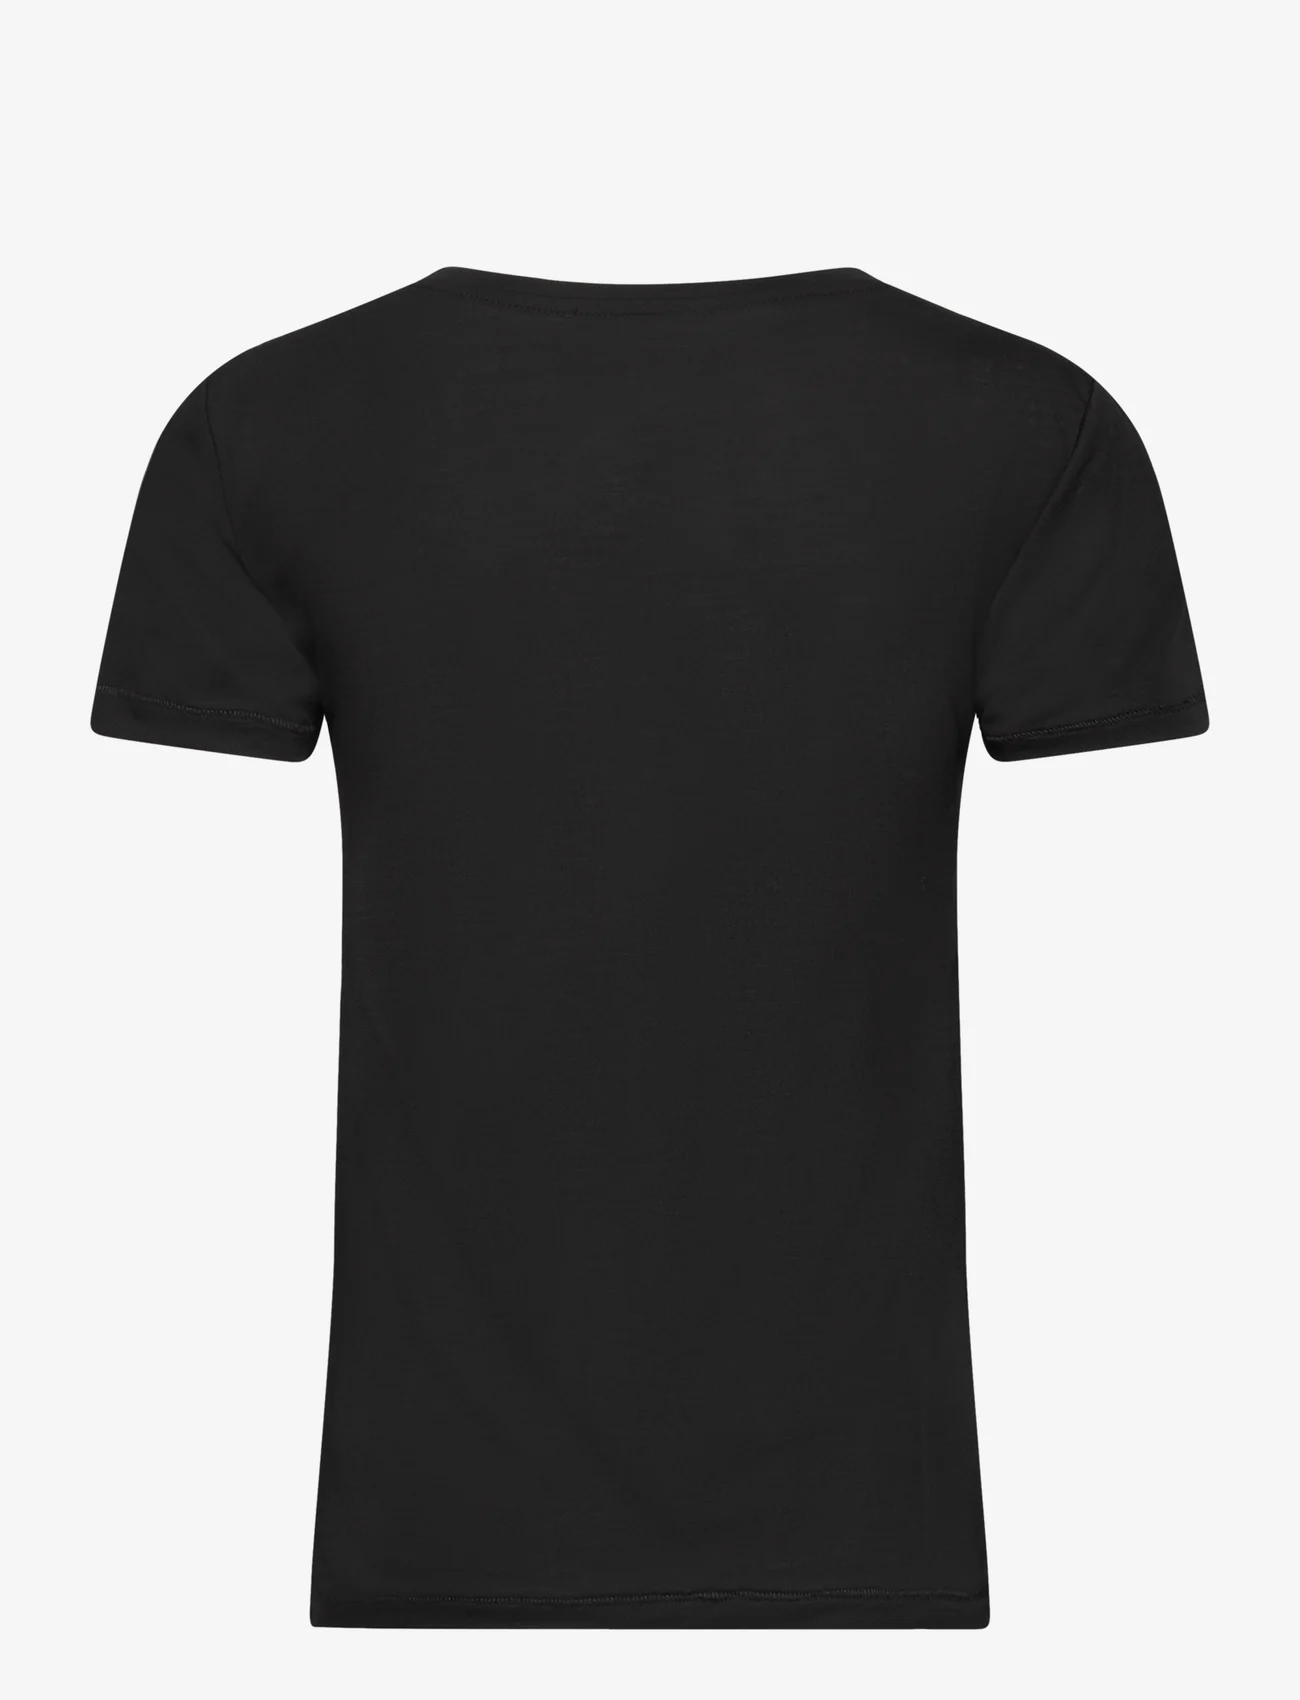 Bruuns Bazaar - KatkaBB ss T-shirt - marškinėliai - black - 1